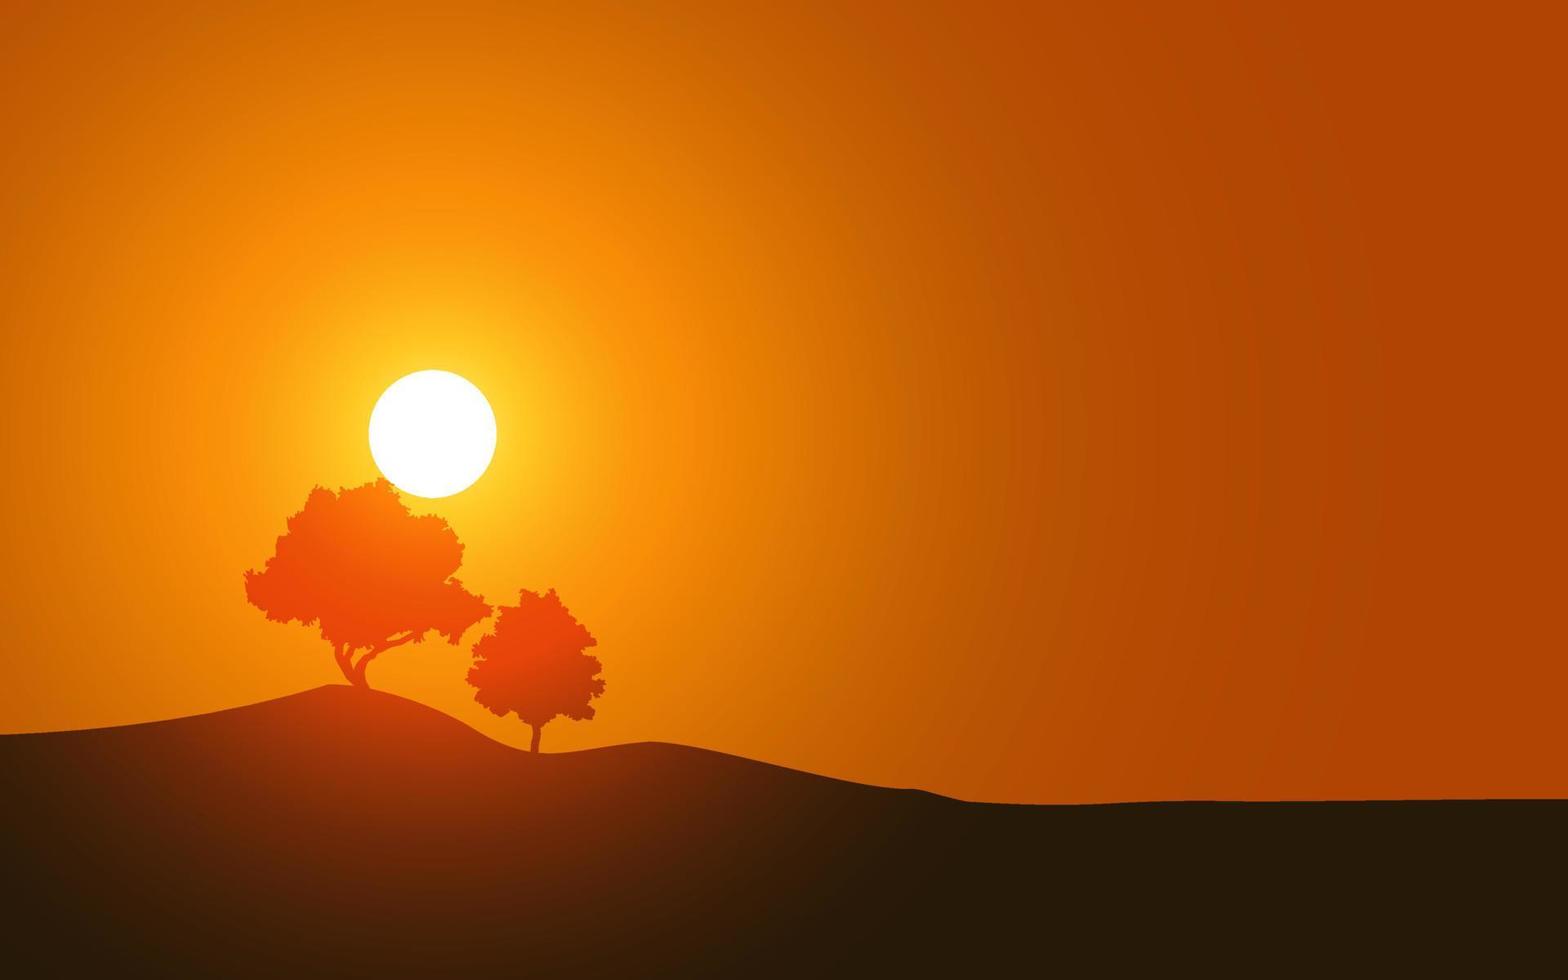 trees silhouette on orange sky sunset vector